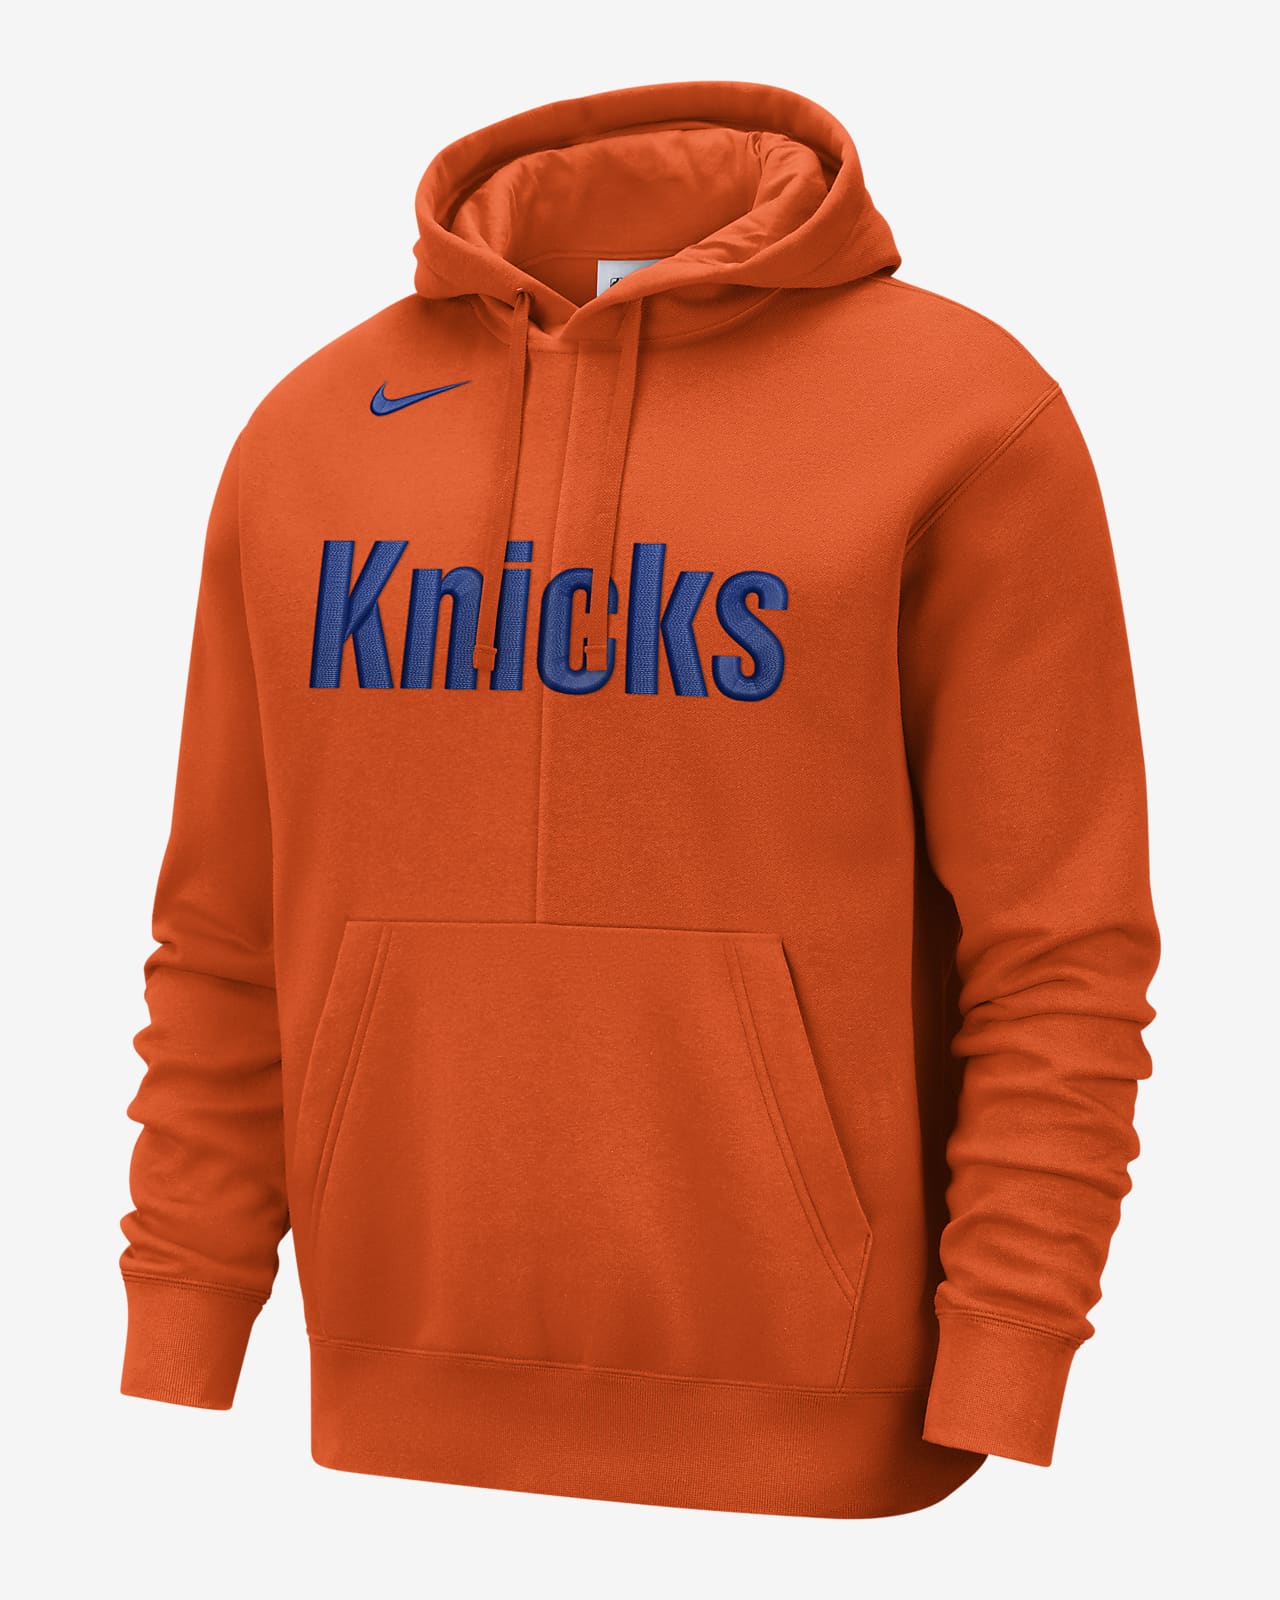 New York Knicks Courtside Men's Nike NBA Fleece Pullover Hoodie.